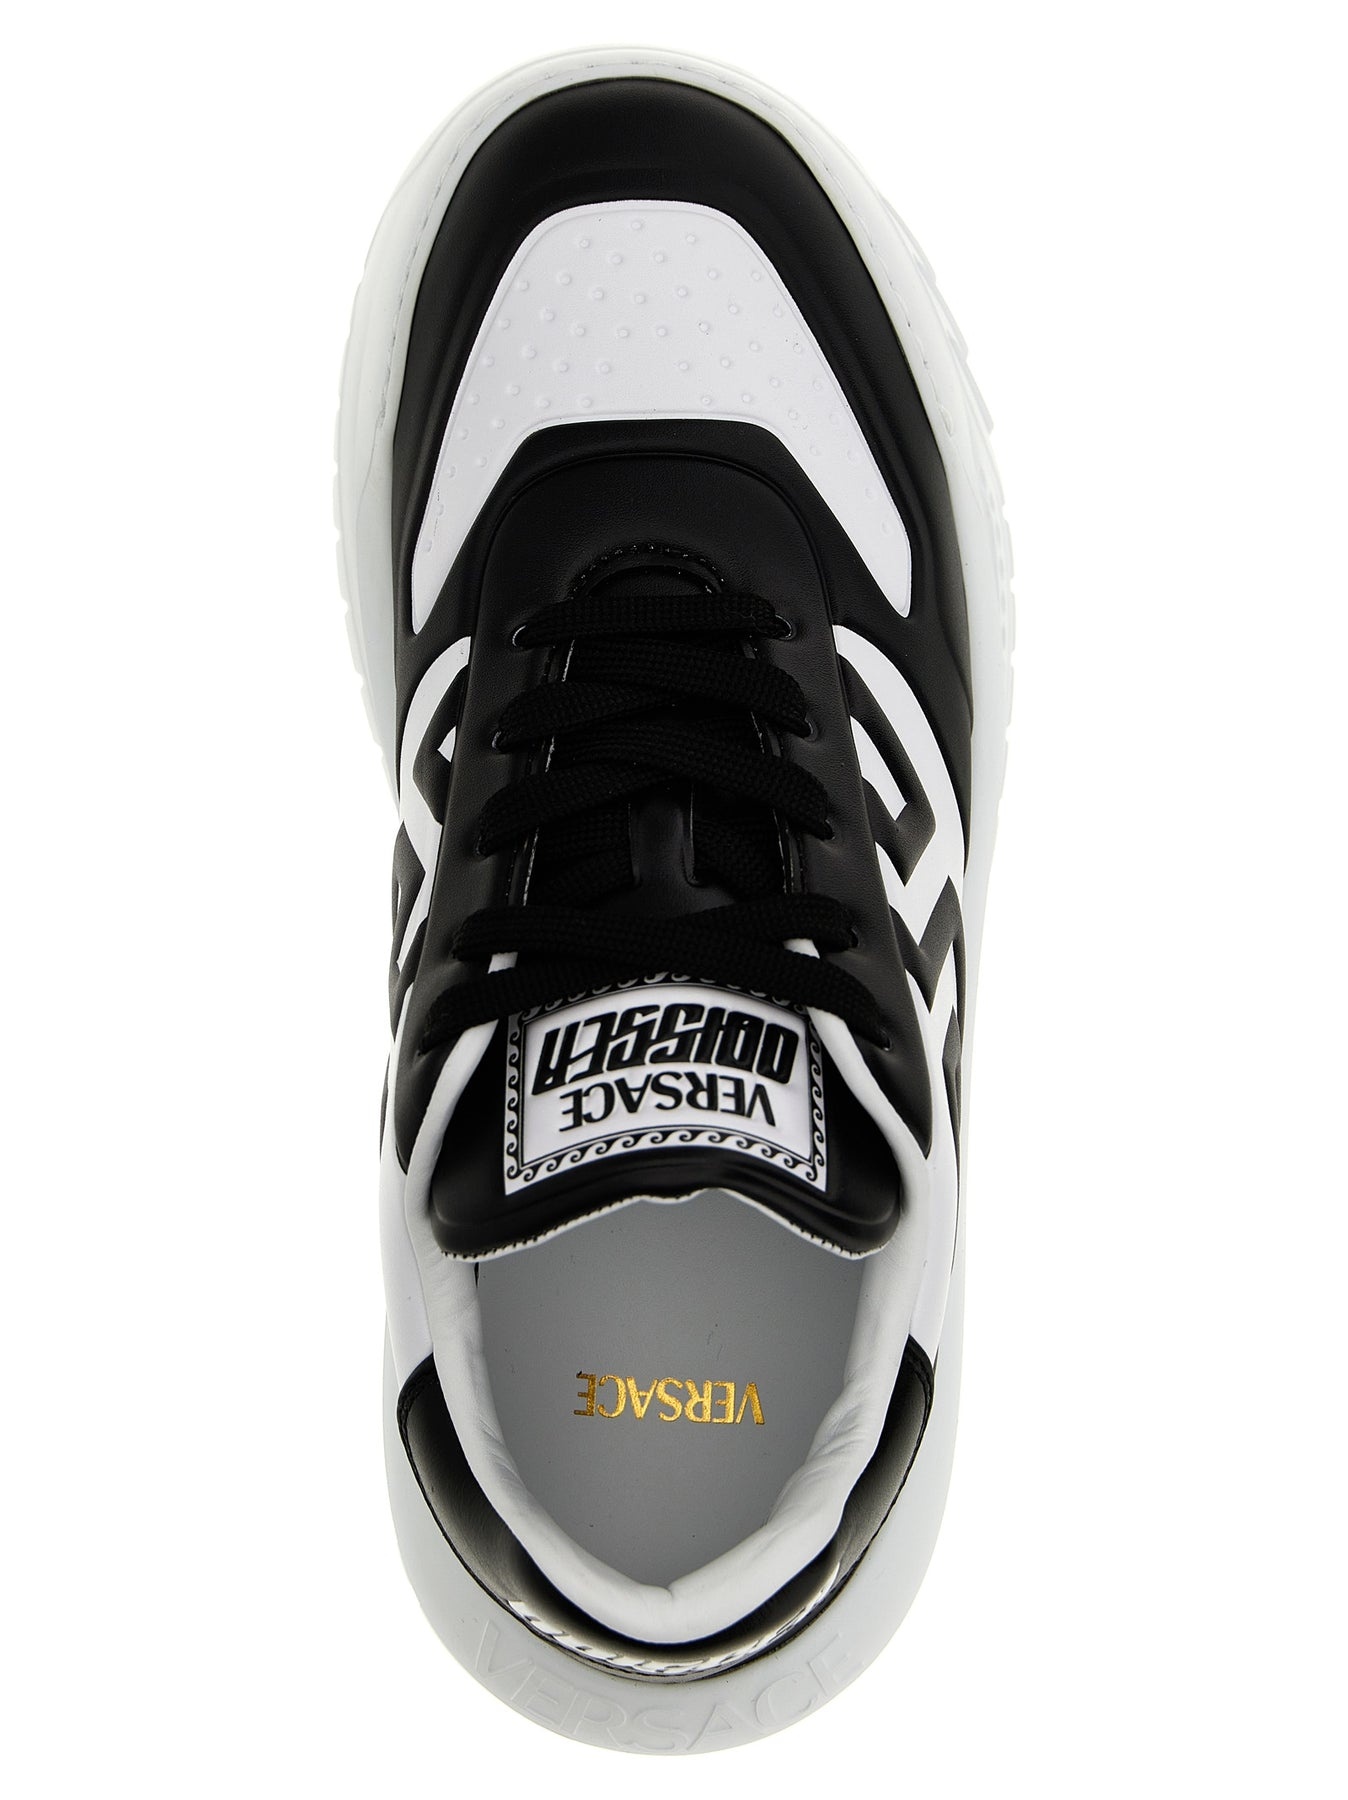 Odissea Greca Sneakers White/Black - 4